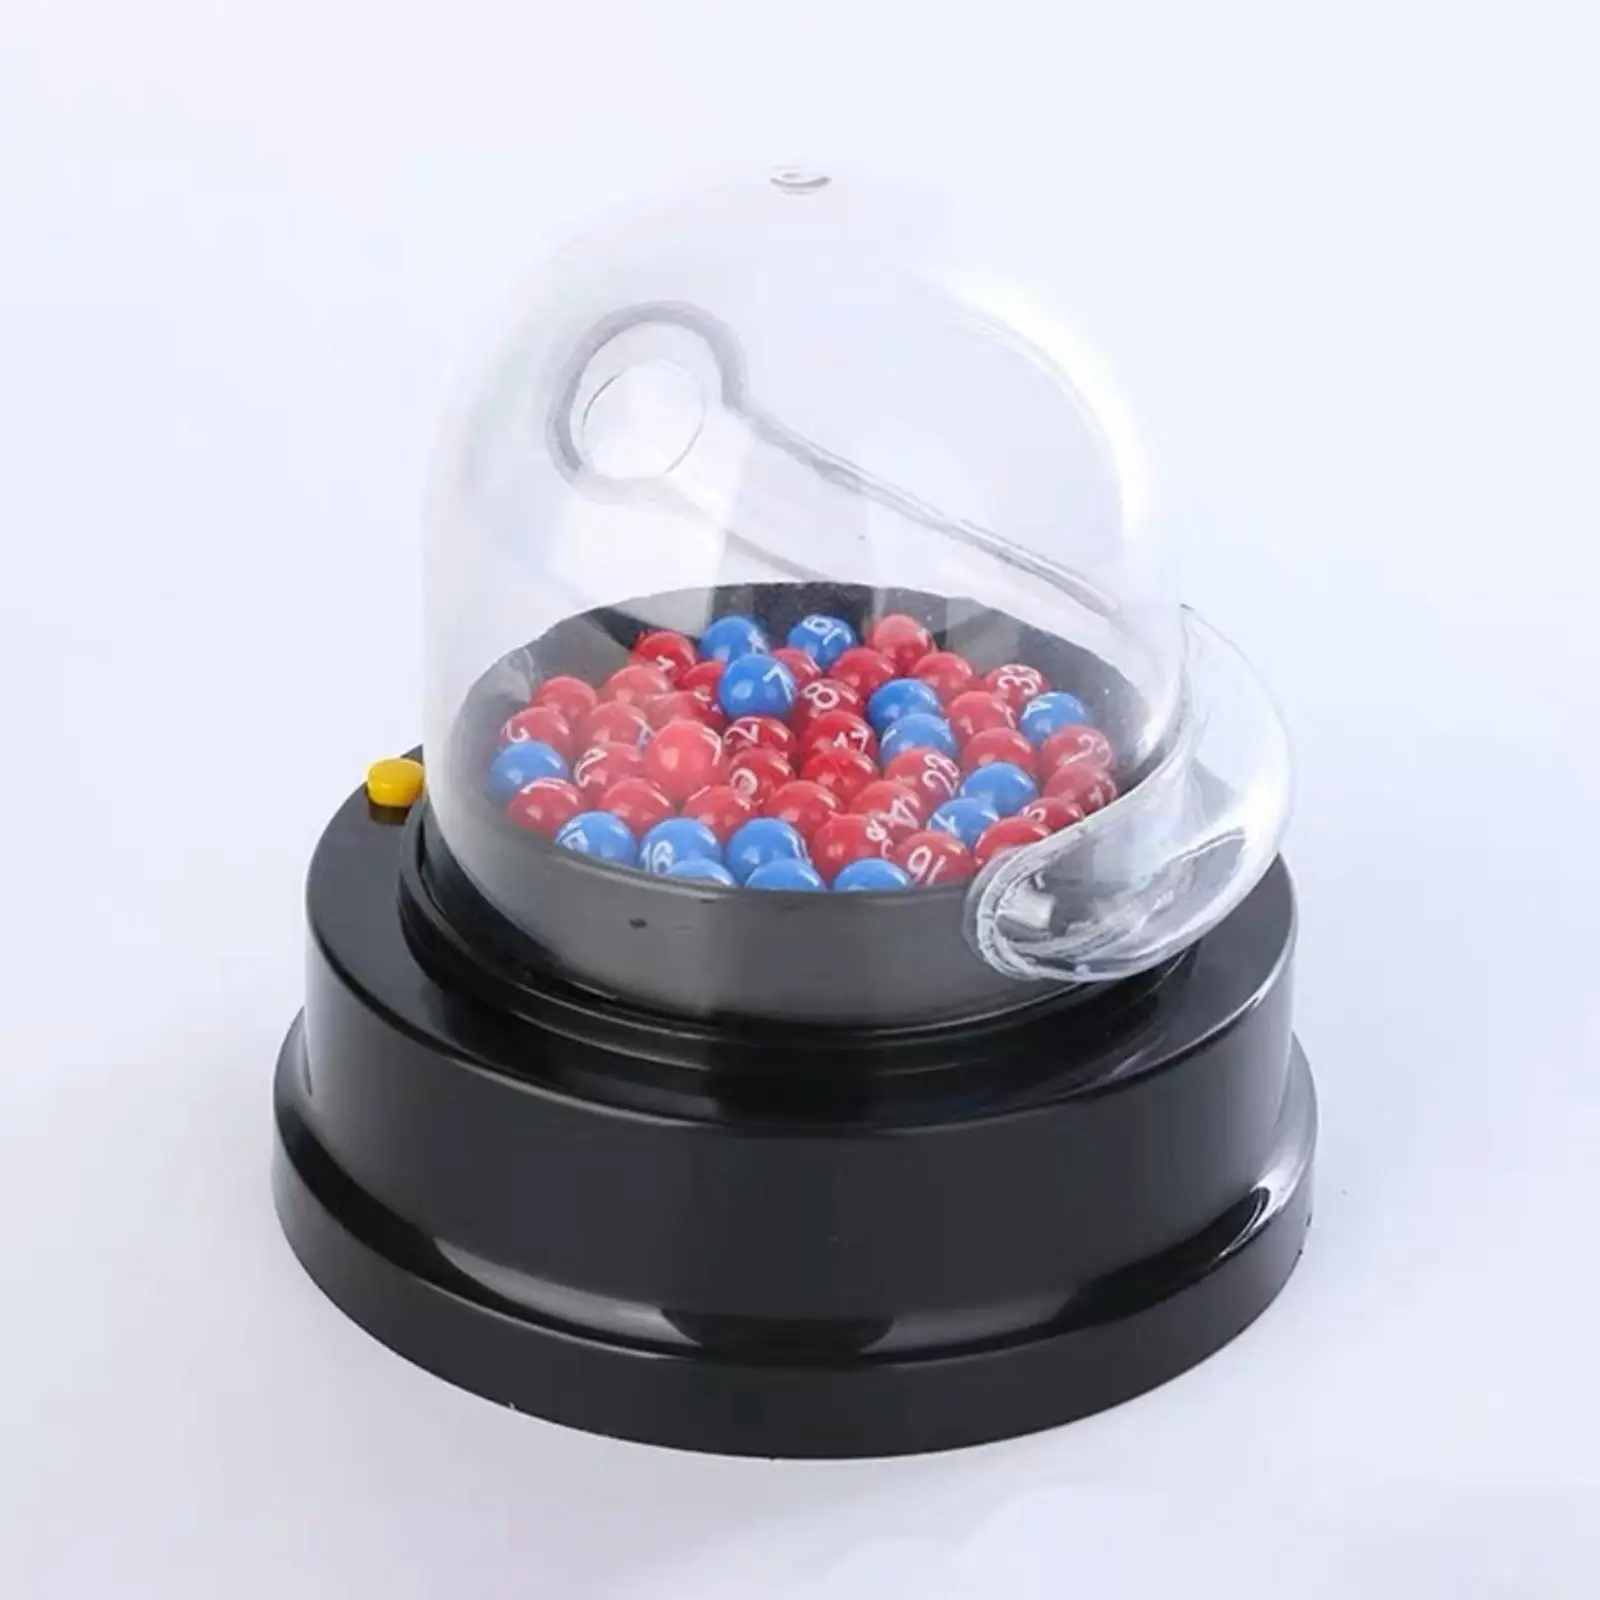 Electric Raffle Balls Machine Bingo Machine Game with Balls for Recreational Activity Restaurant Sweepstakes Nightclub